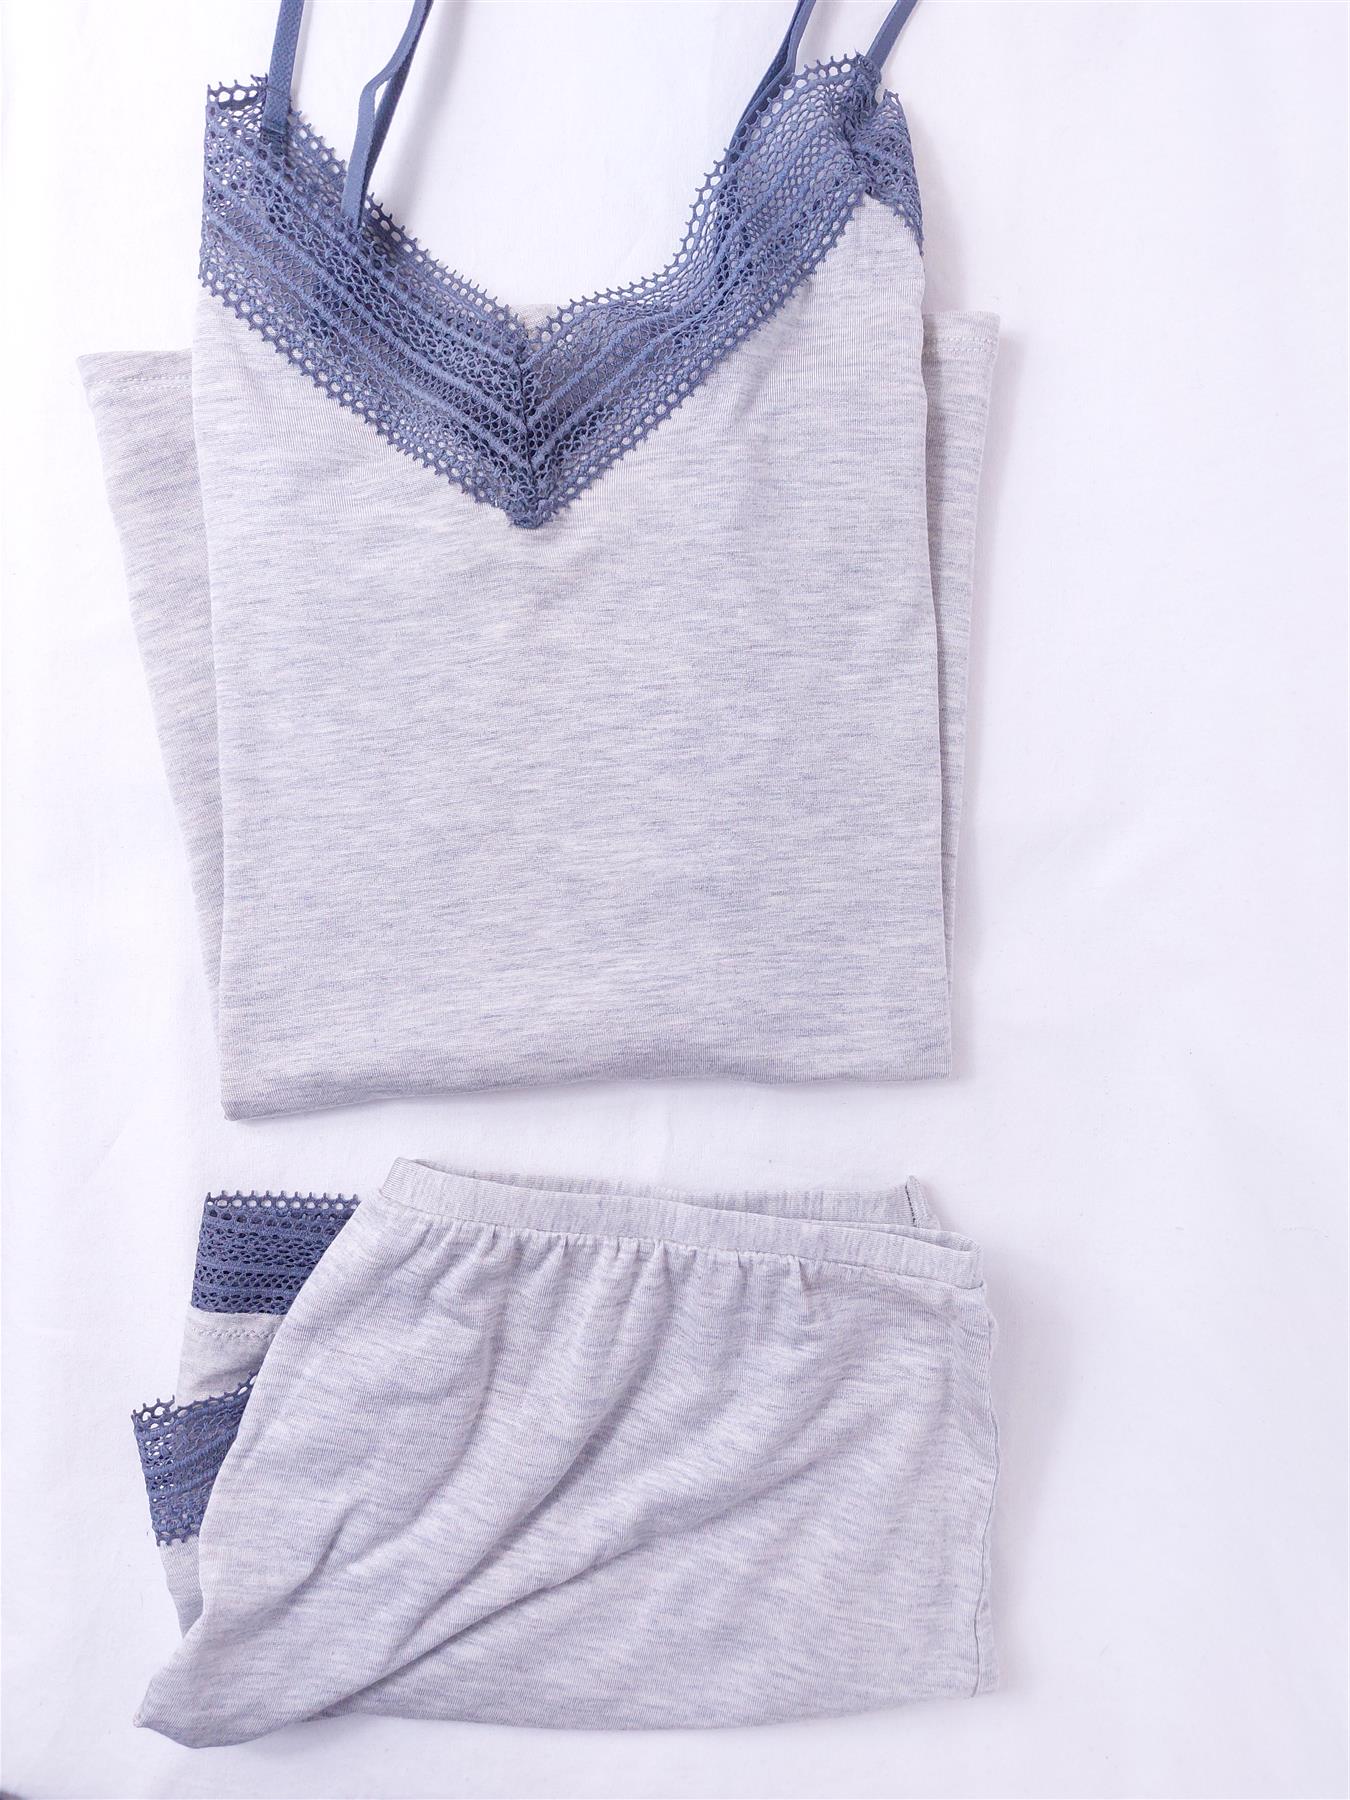 Women's Supersoft Pyjama Set Cami Top & Shorts Comfy Soft Stretch Lace Grey Blue